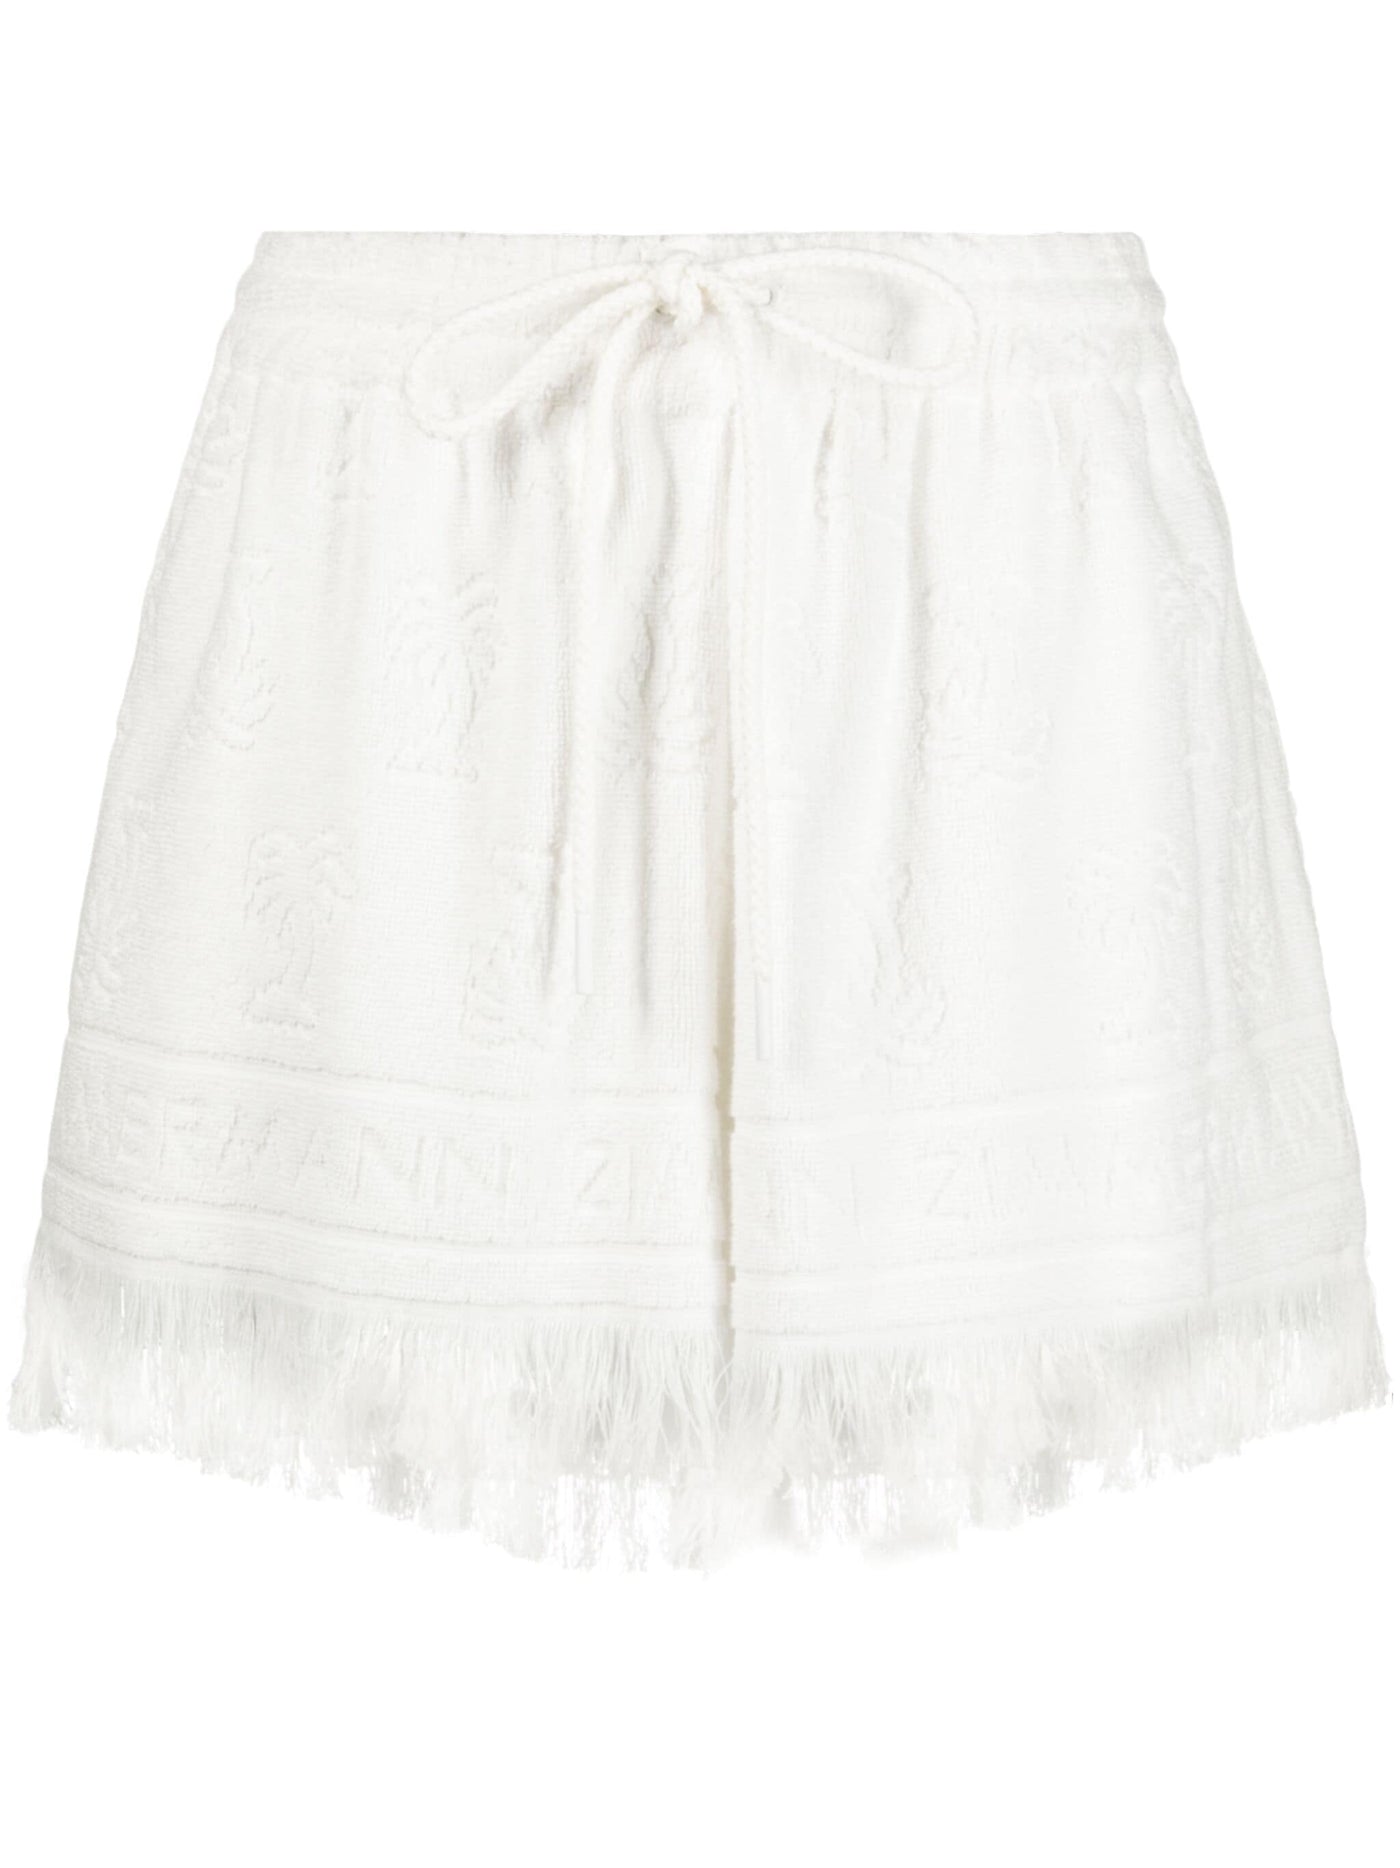 Alight Toweling Shorts - Ivory